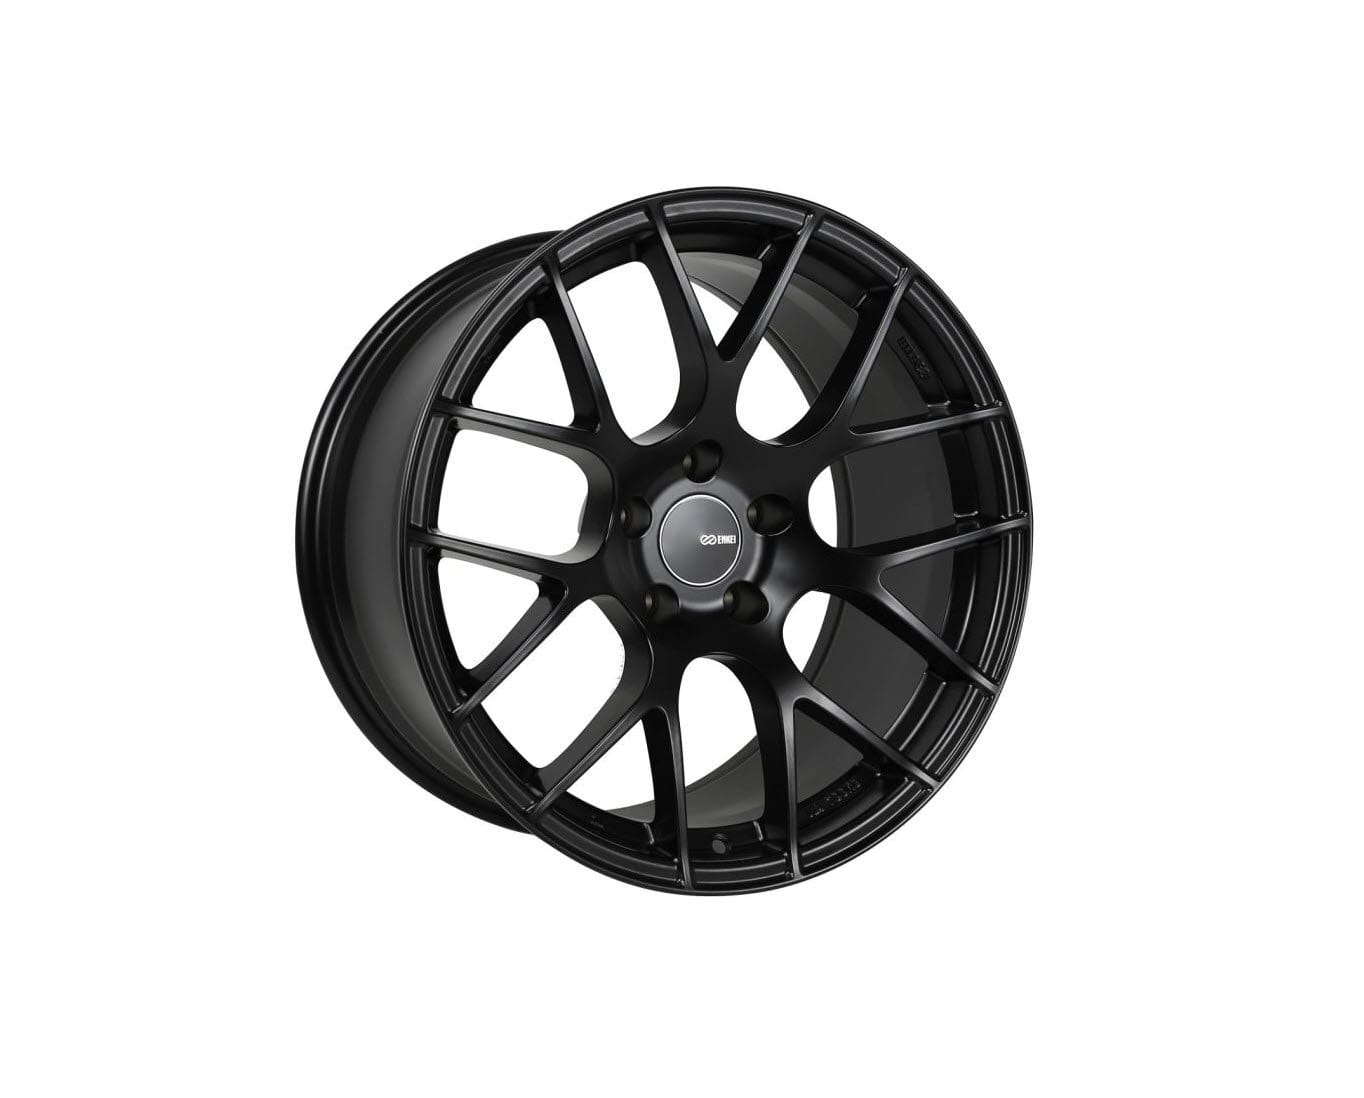 Enkei Raijin 18x9.5 5x100 45mm - Black Wheel - Dirty Racing Products